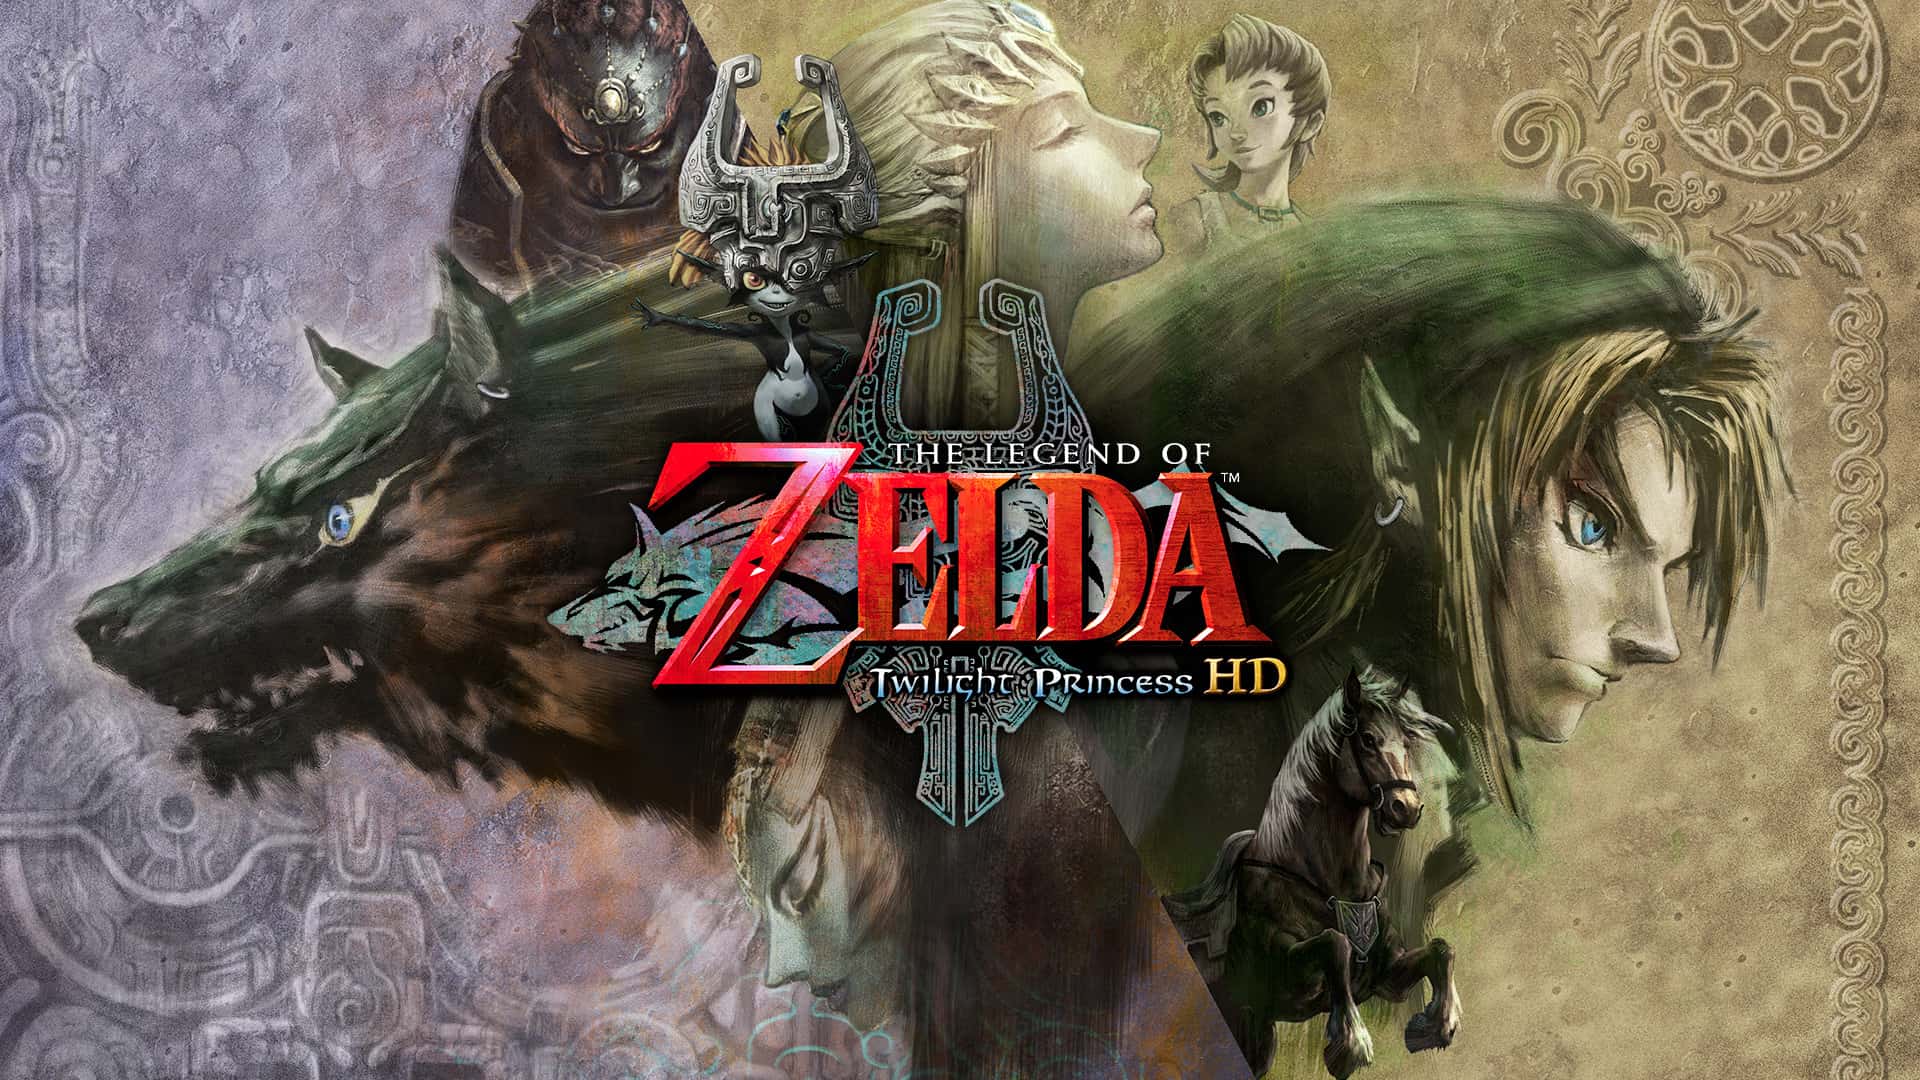 Meilleurs jeux Zelda - The Legend of Zelda - Twilight Princess